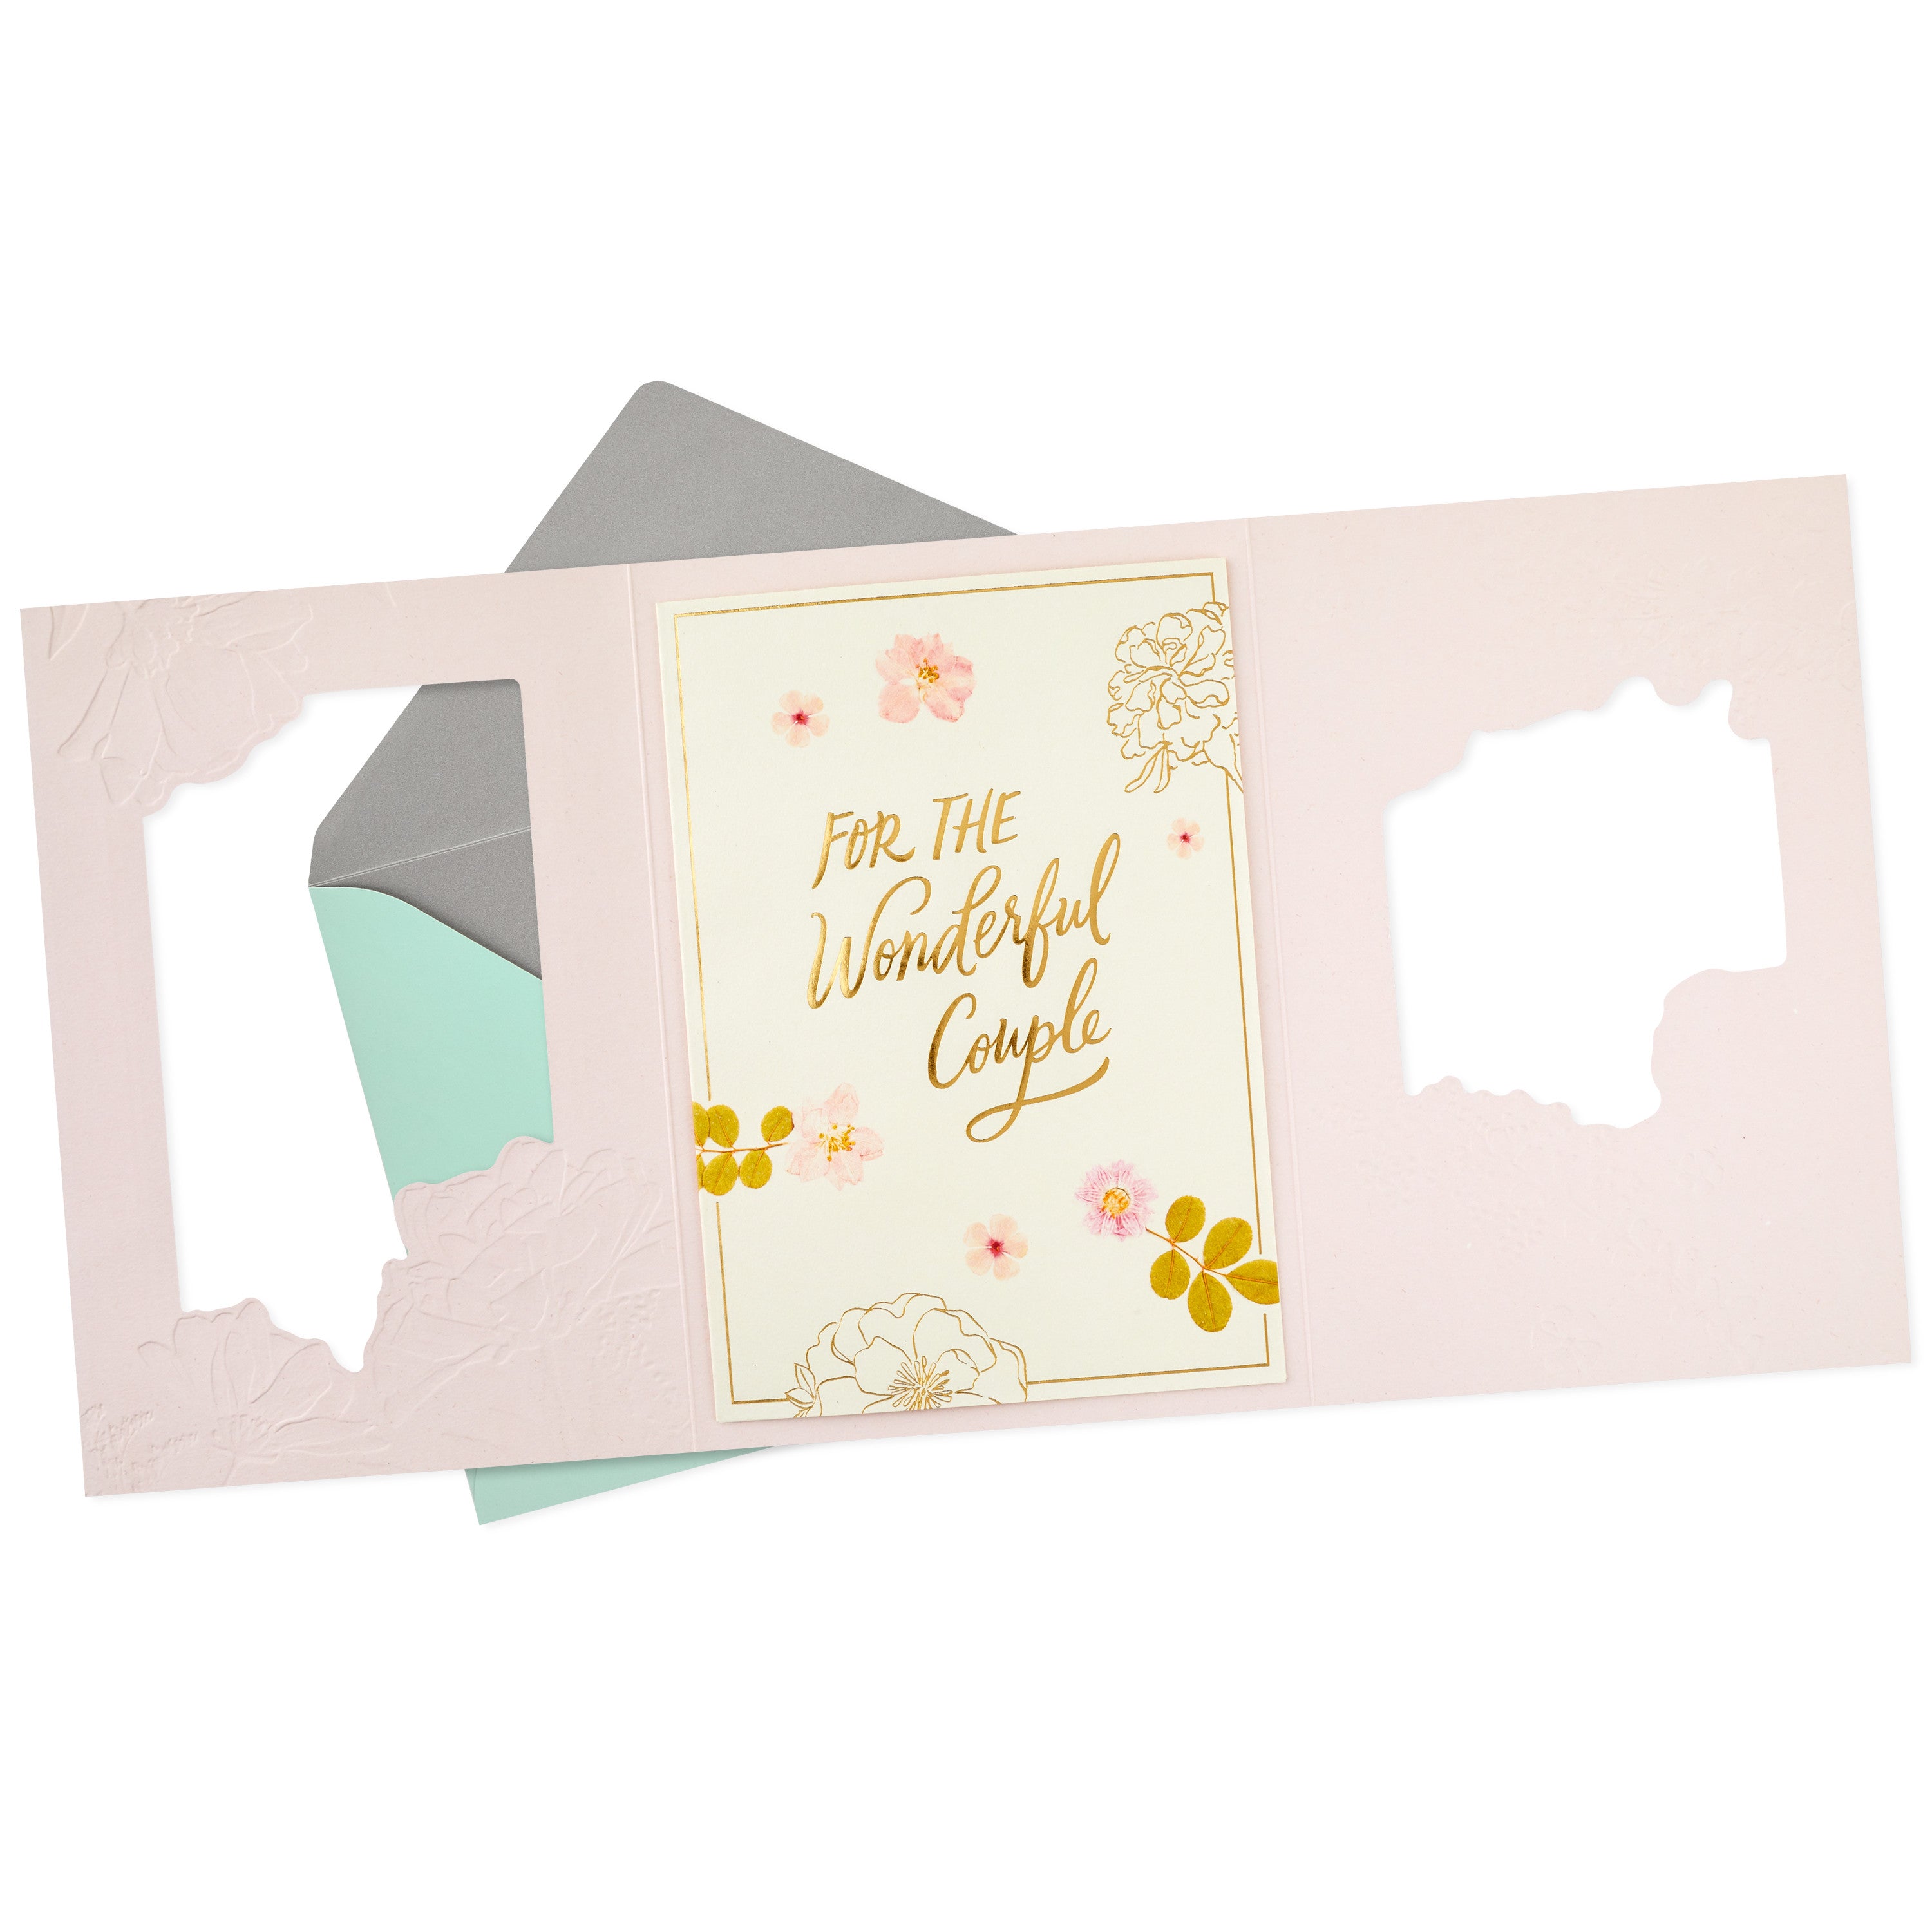 Hallmark Wedding Card, Bridal Shower Card, Engagement Card (Wonderful Couple)